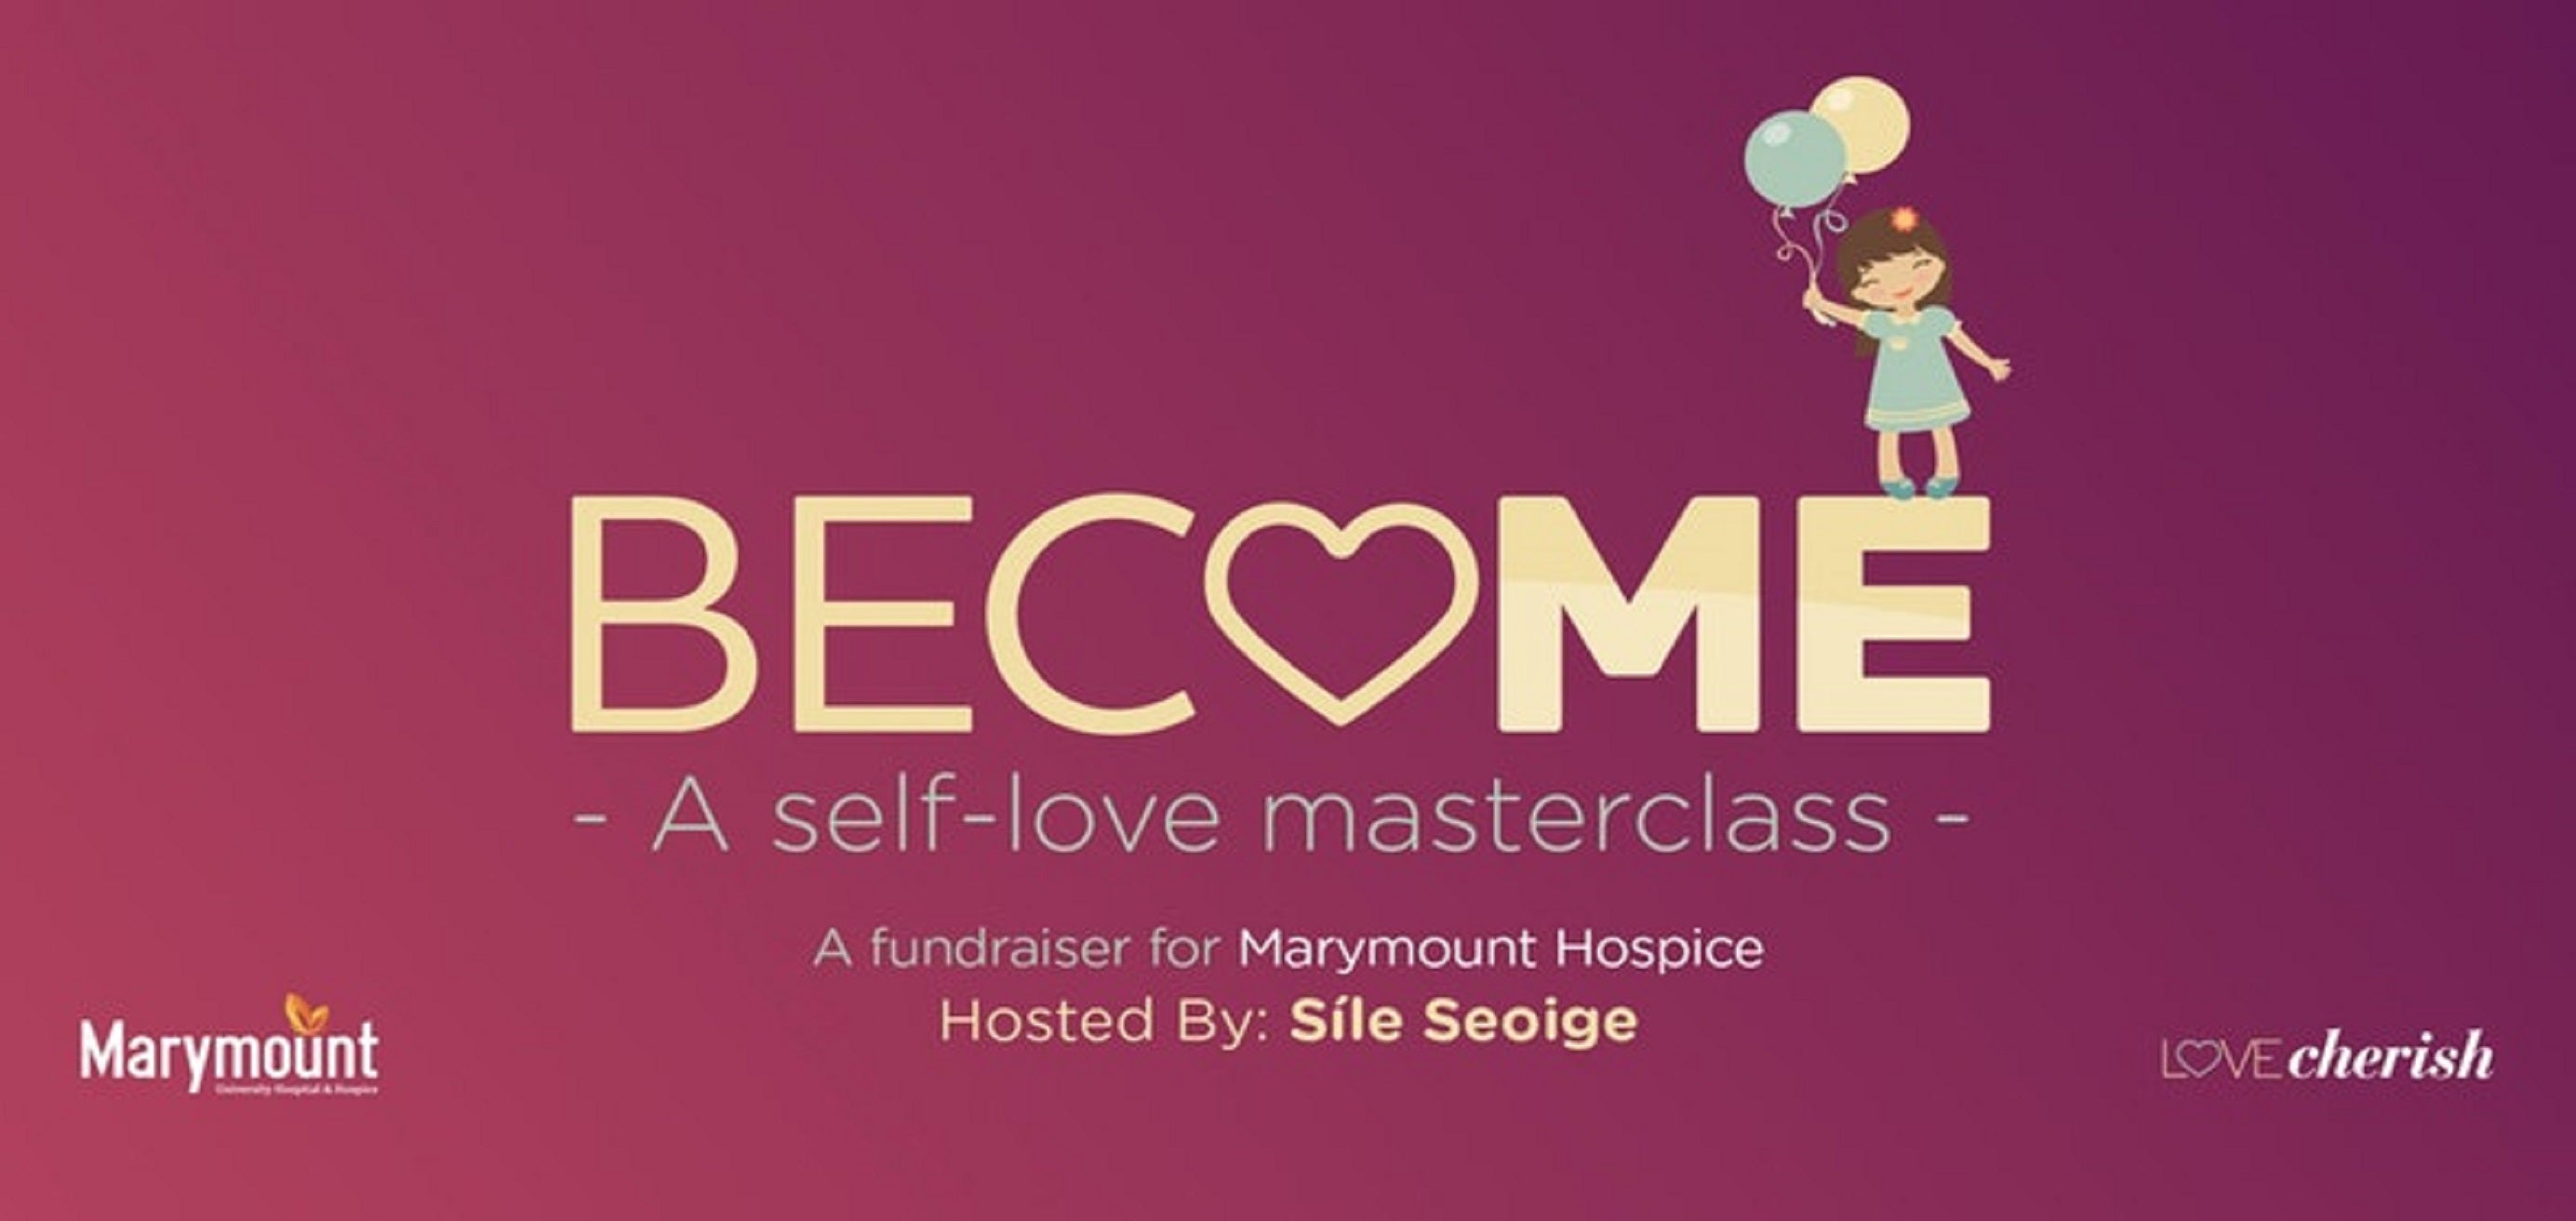 Become Self Love Masterclass Event Raises over €24,553!